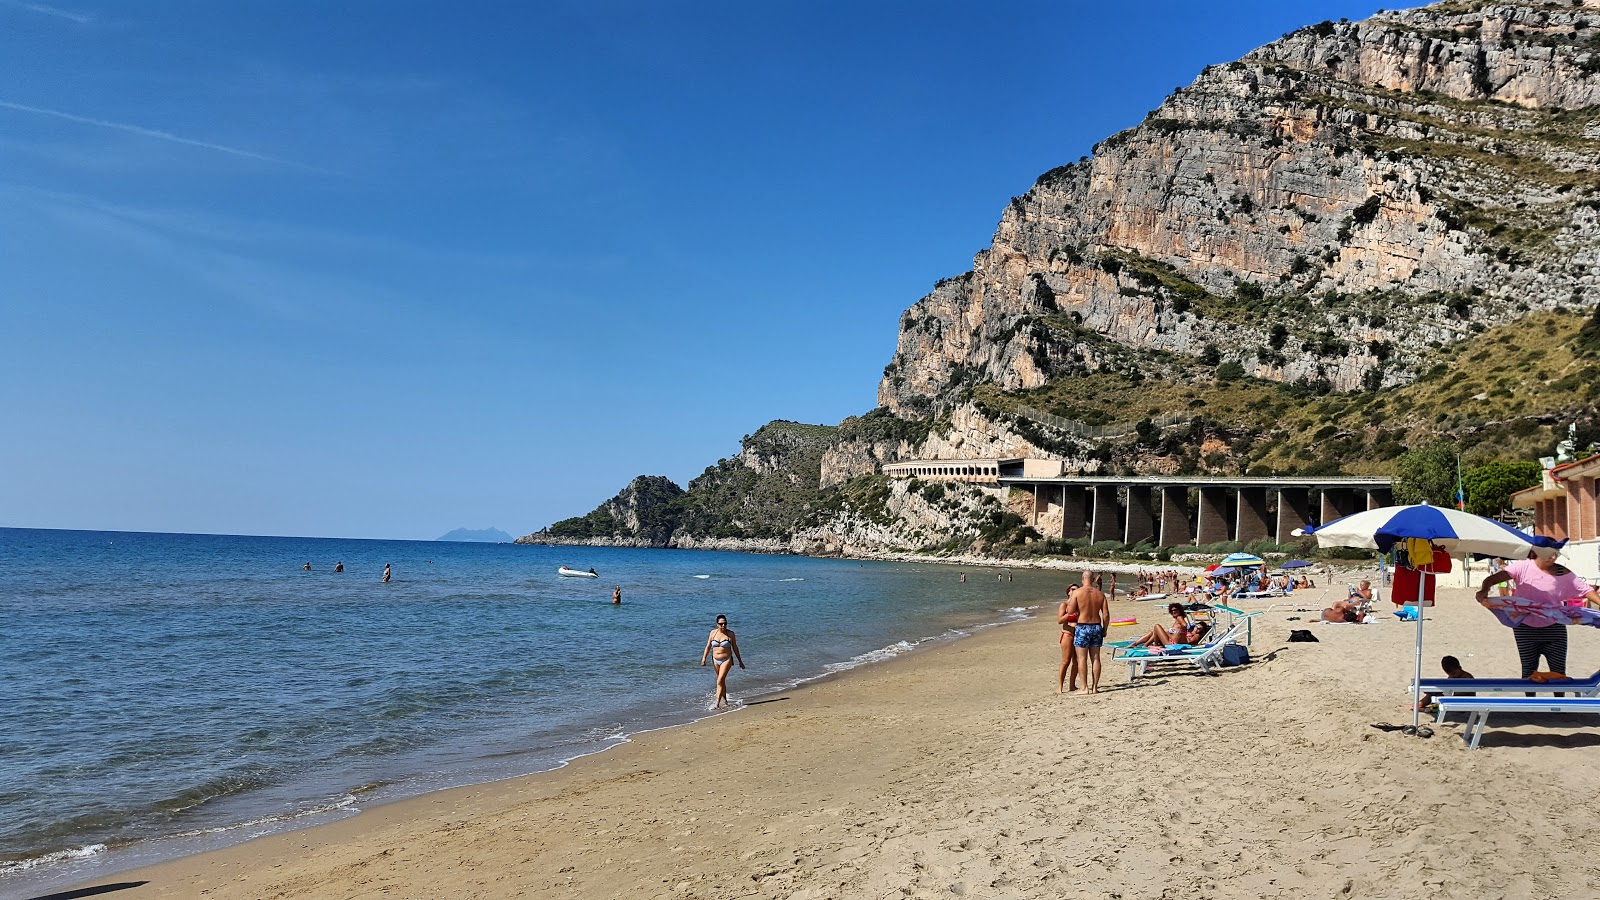 Fotografie cu Spiaggia di Sant' Agostino cu o suprafață de nisip maro